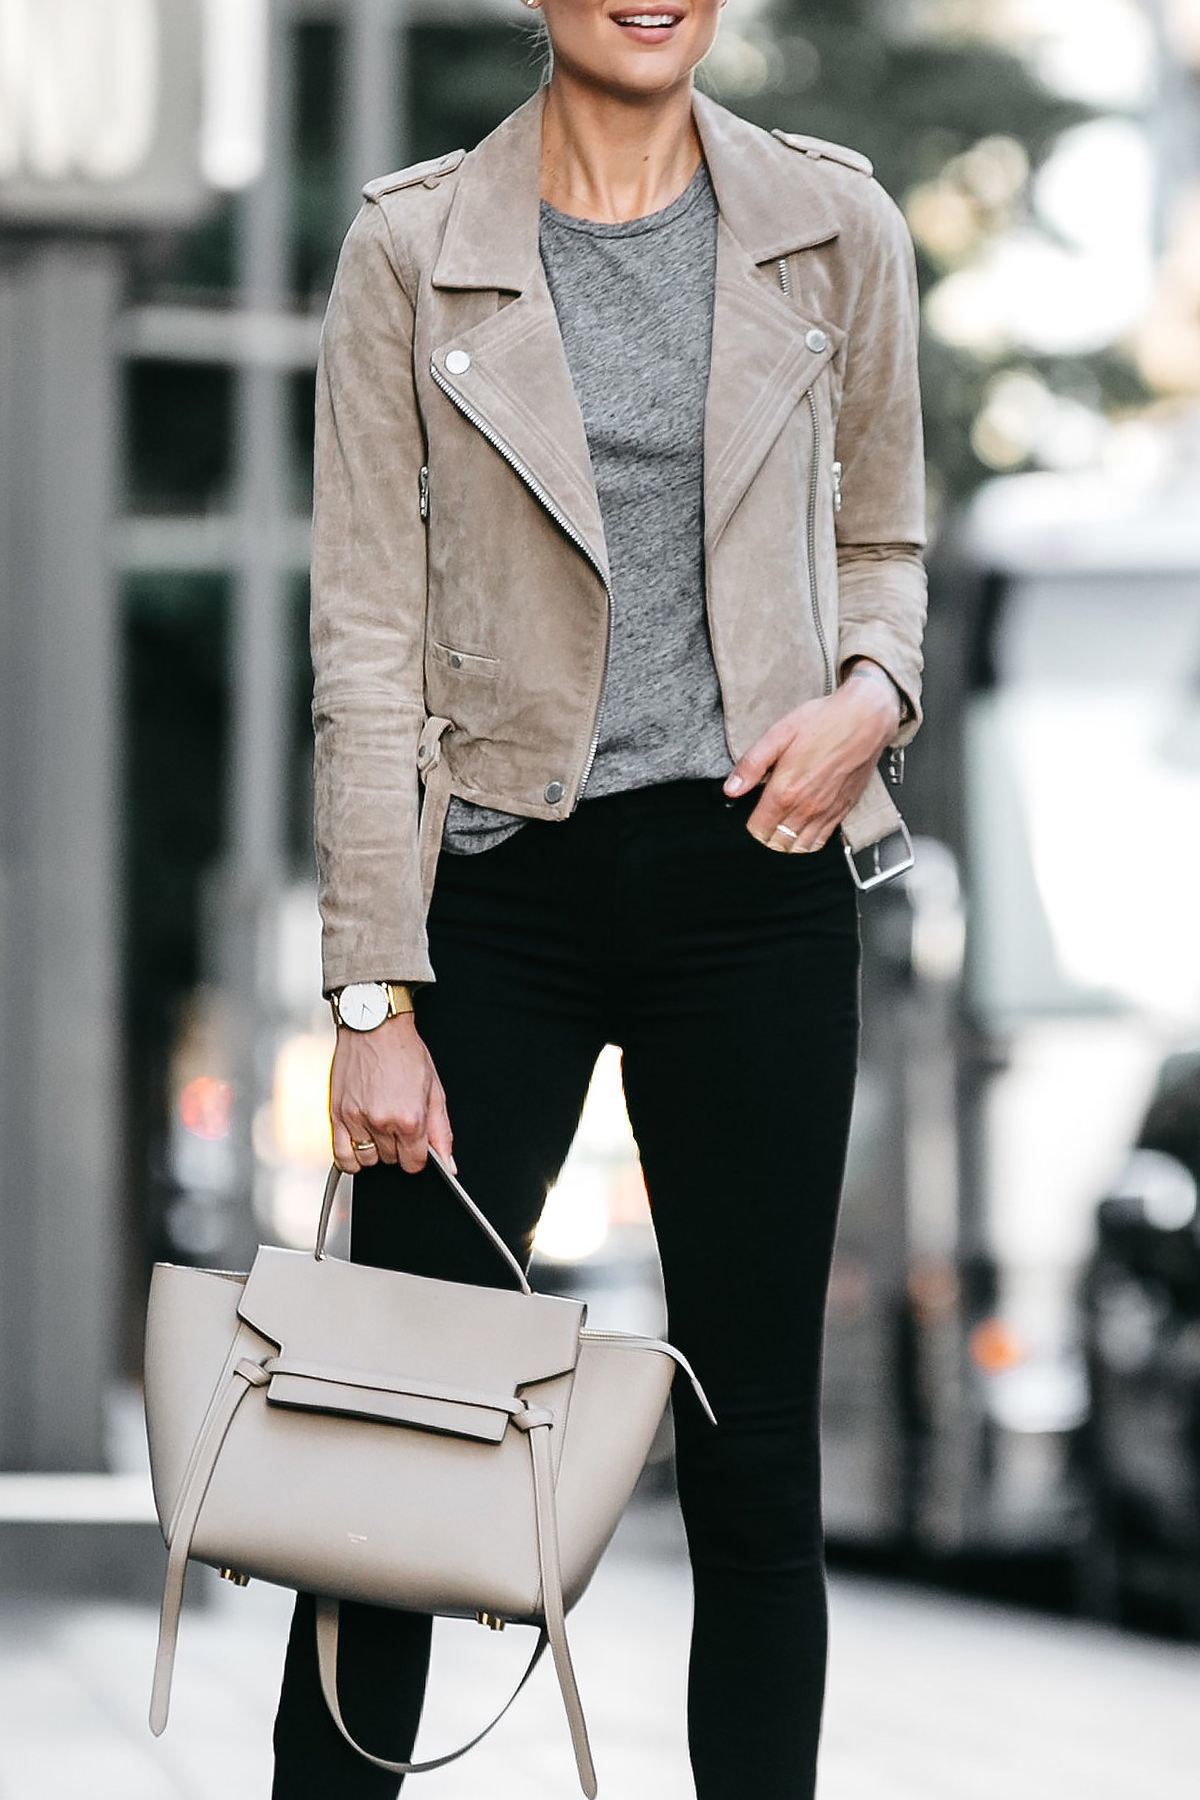 Blanknyc Tan Suede Moto Jacket Grey Tshirt Black Skinny Jeans Outfit Celine Belt Bag Fashion Jackson Dallas Blogger Fashion Blogger Street Style